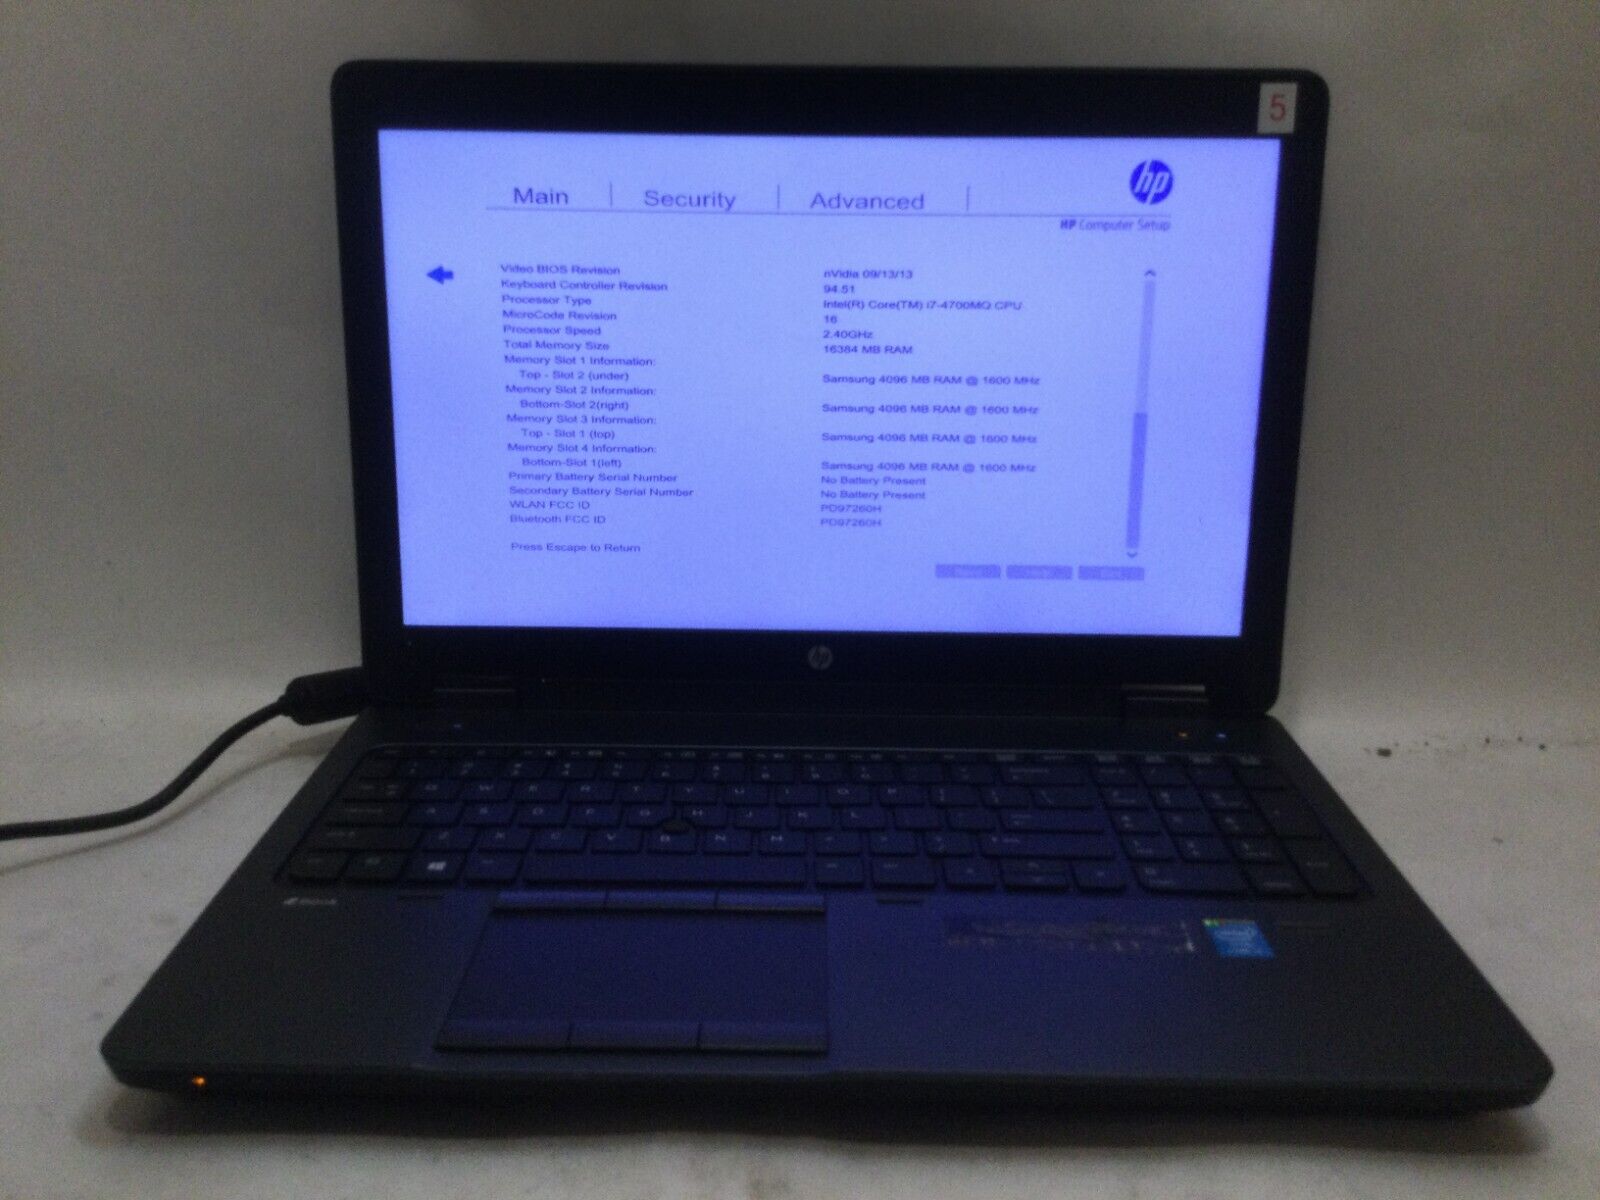 HP ZBook 15 / Intel Core i7-4700MQ @ 2.40GHz / (MISSING PARTS) MR